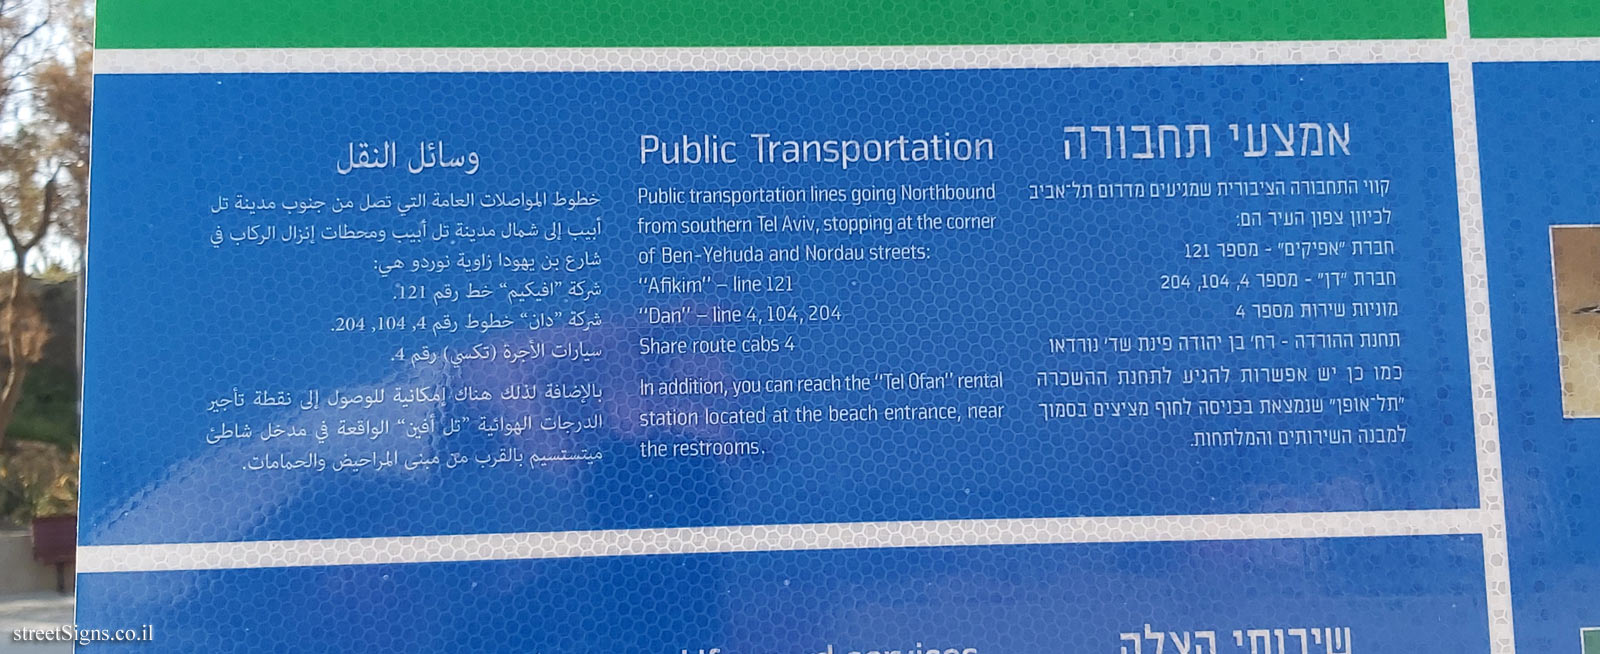 Tel Aviv - Blue Flag Beach - Metzitzim Beach - Public Transportation